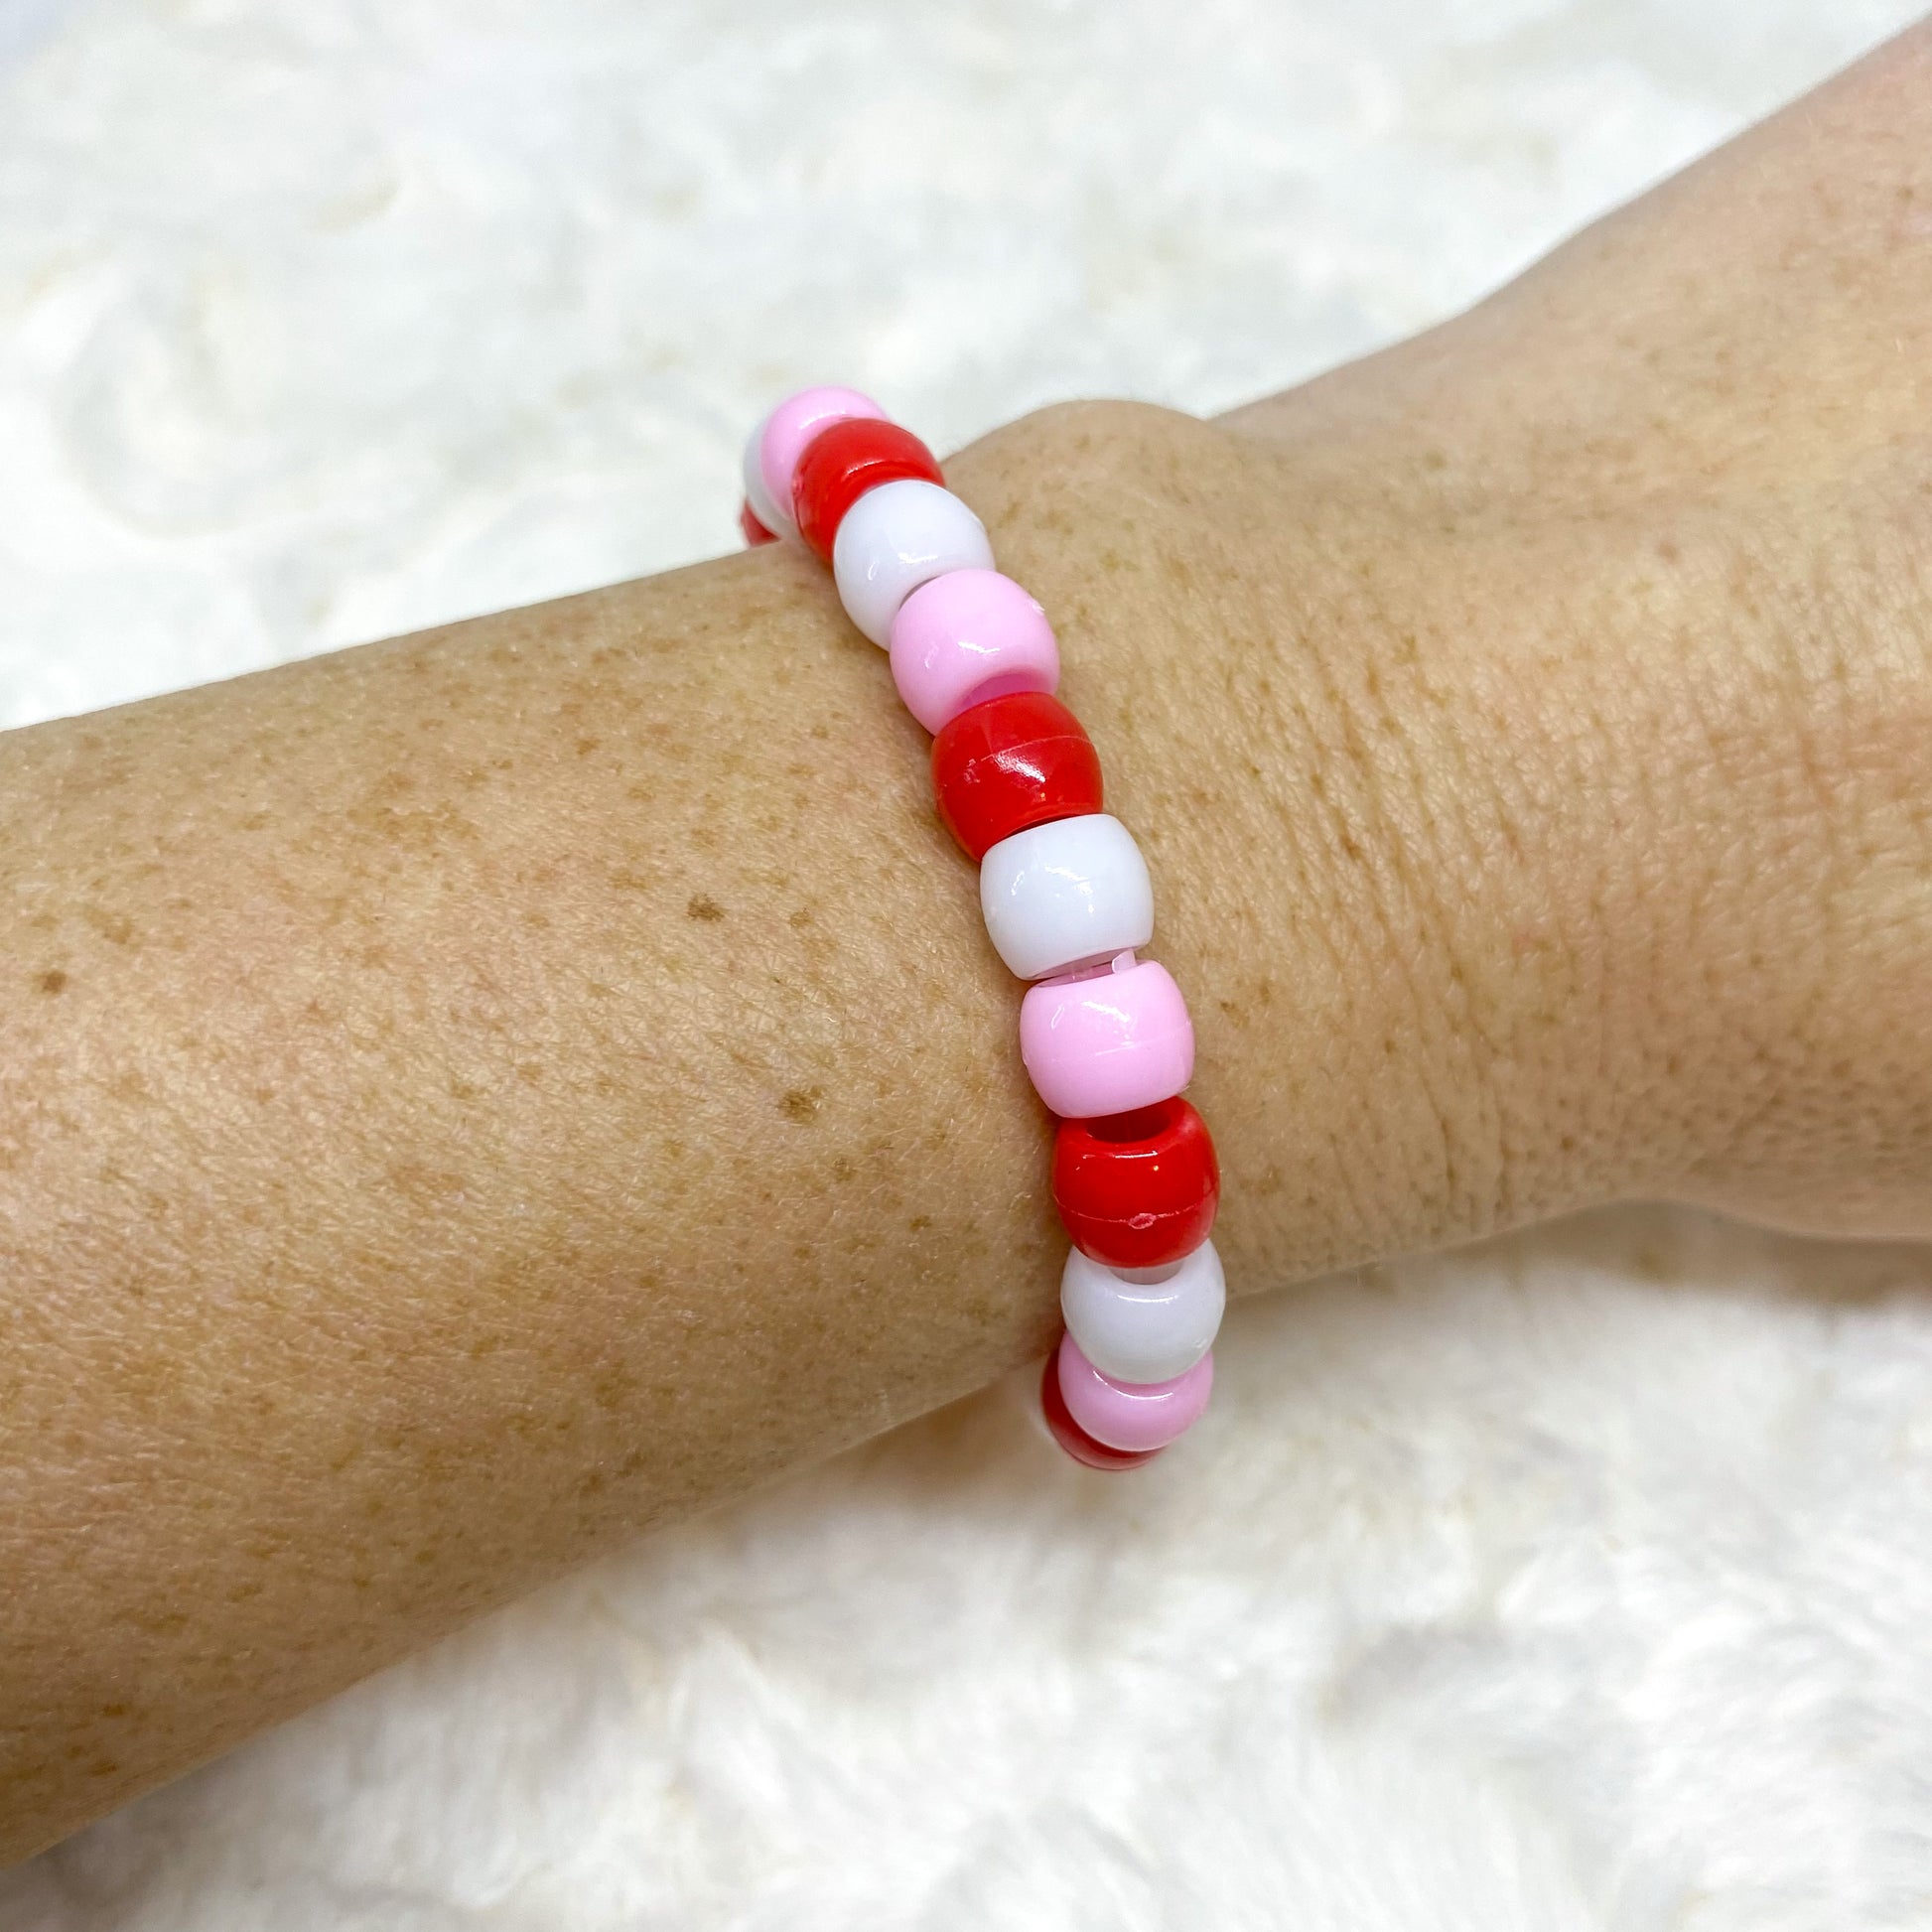 Valentine's Day Pony Bead Assortment, Vday Beads for Bracelet